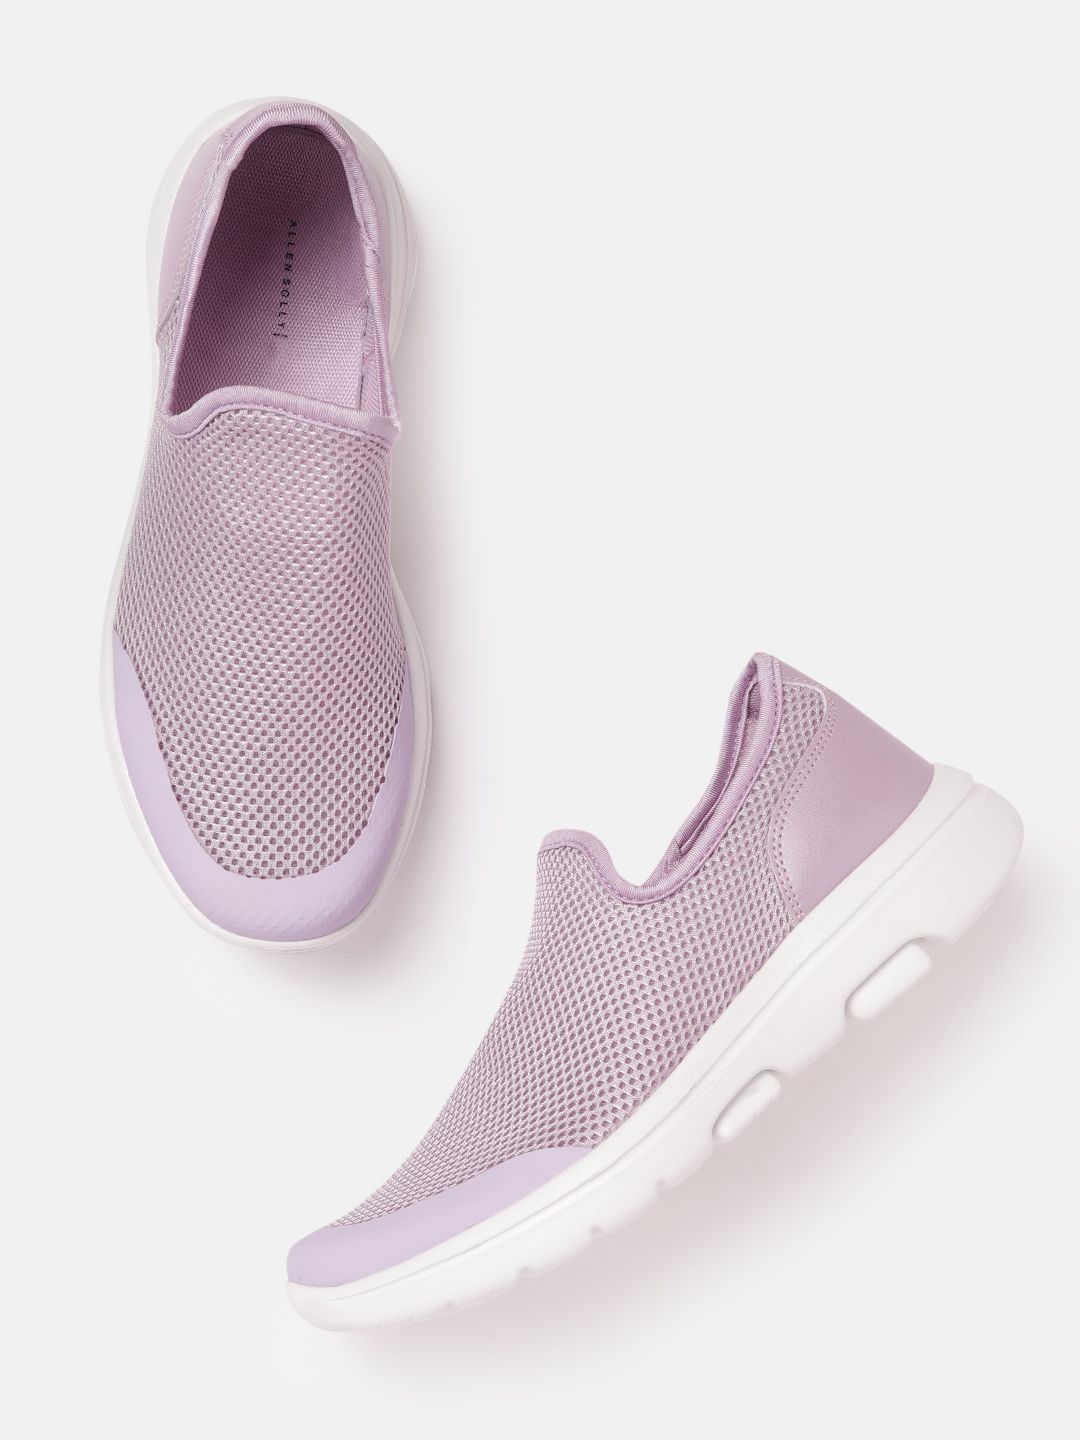 Allen Solly Women Lavender Woven Design Slip-On Sneakers Price in India